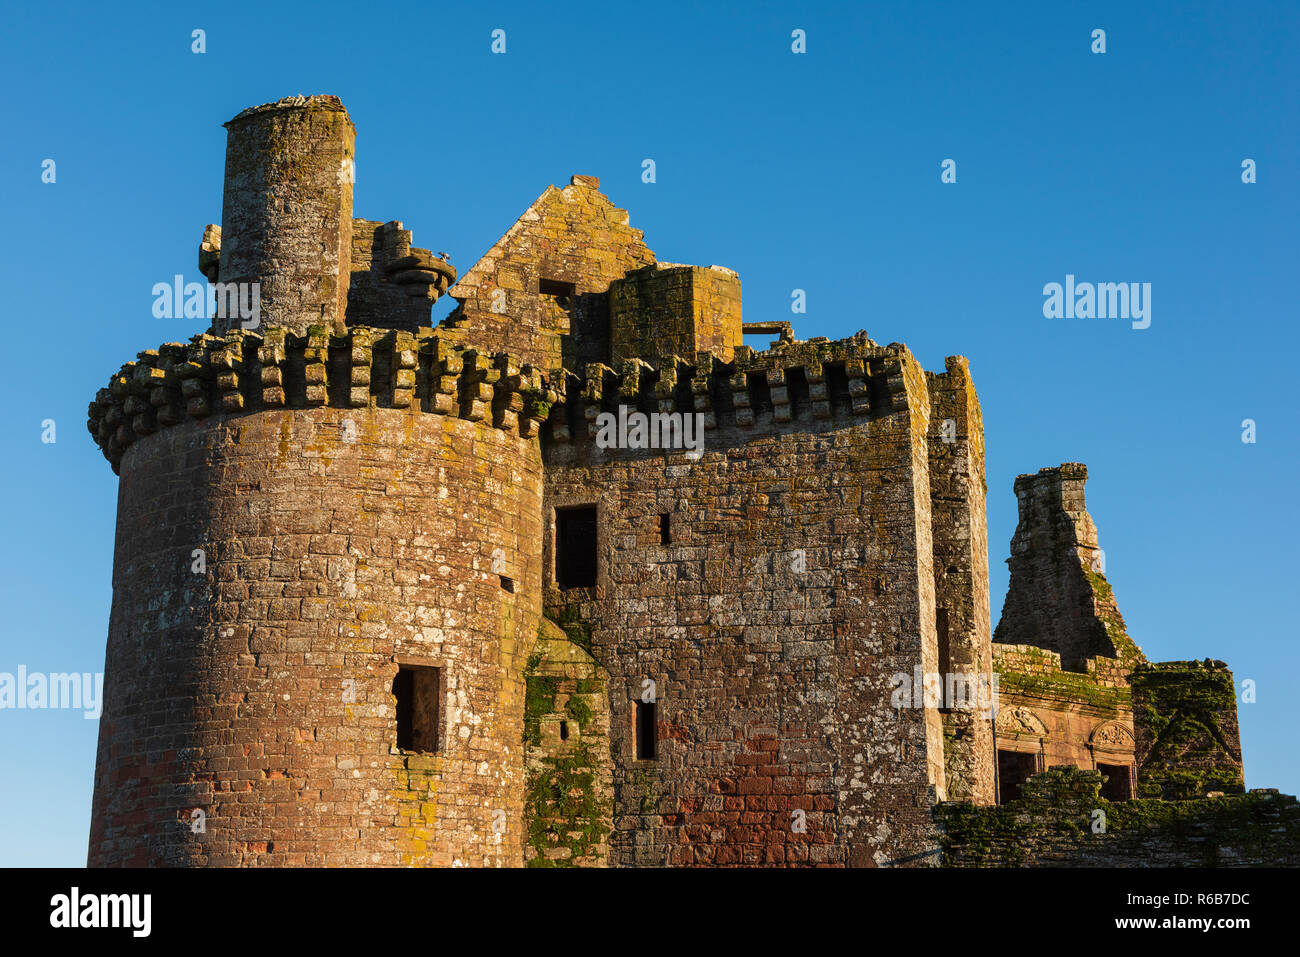 Caerlaverock Castle, Dumfries and Galloway, Scotland. Stock Photo